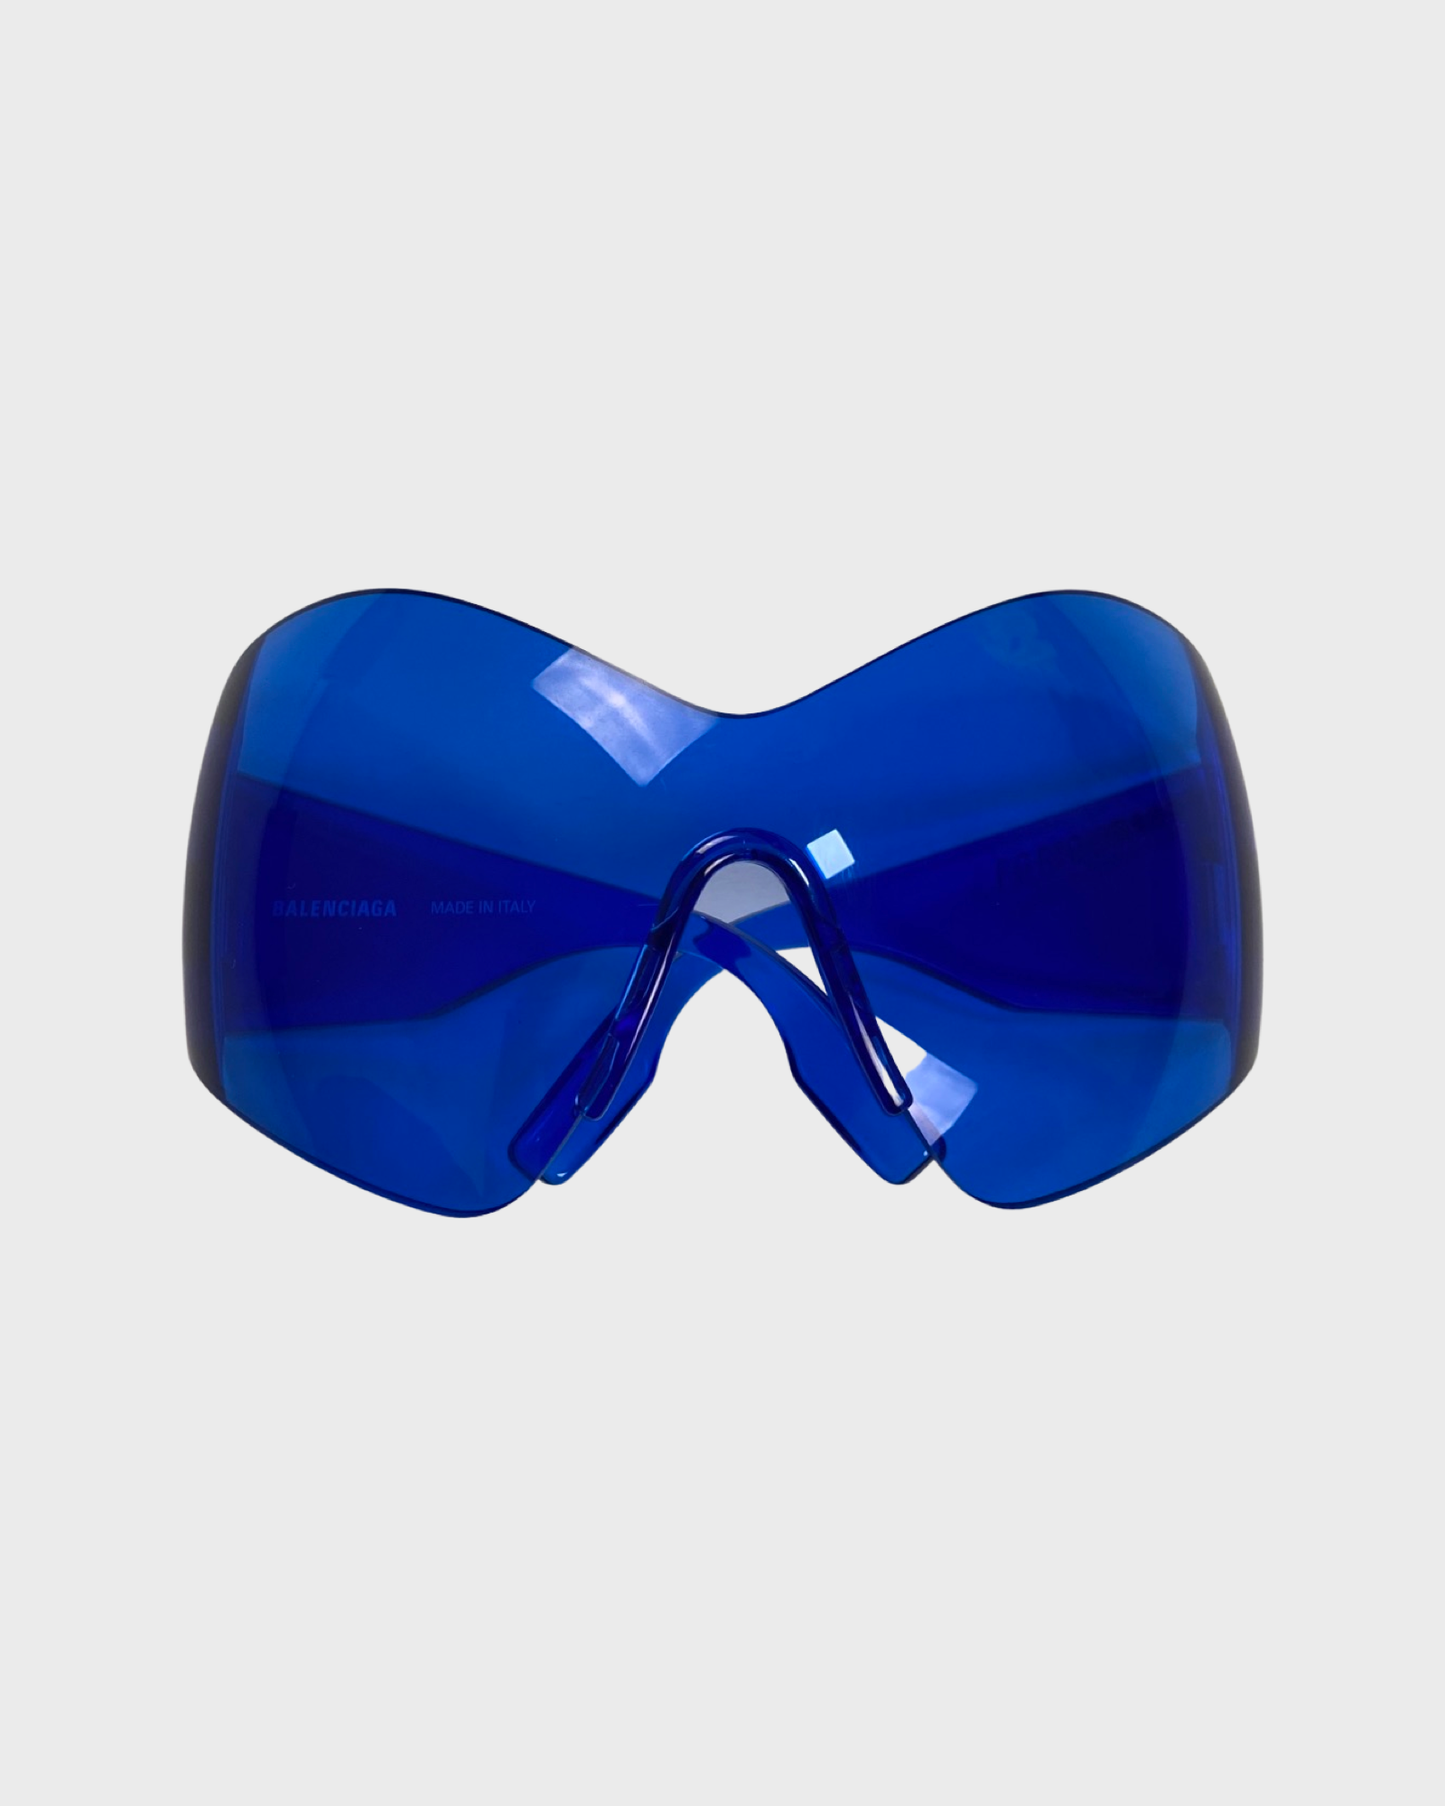 Balenciaga AW21 afterworld butterfly mask sunglasses in blue SZ:OS